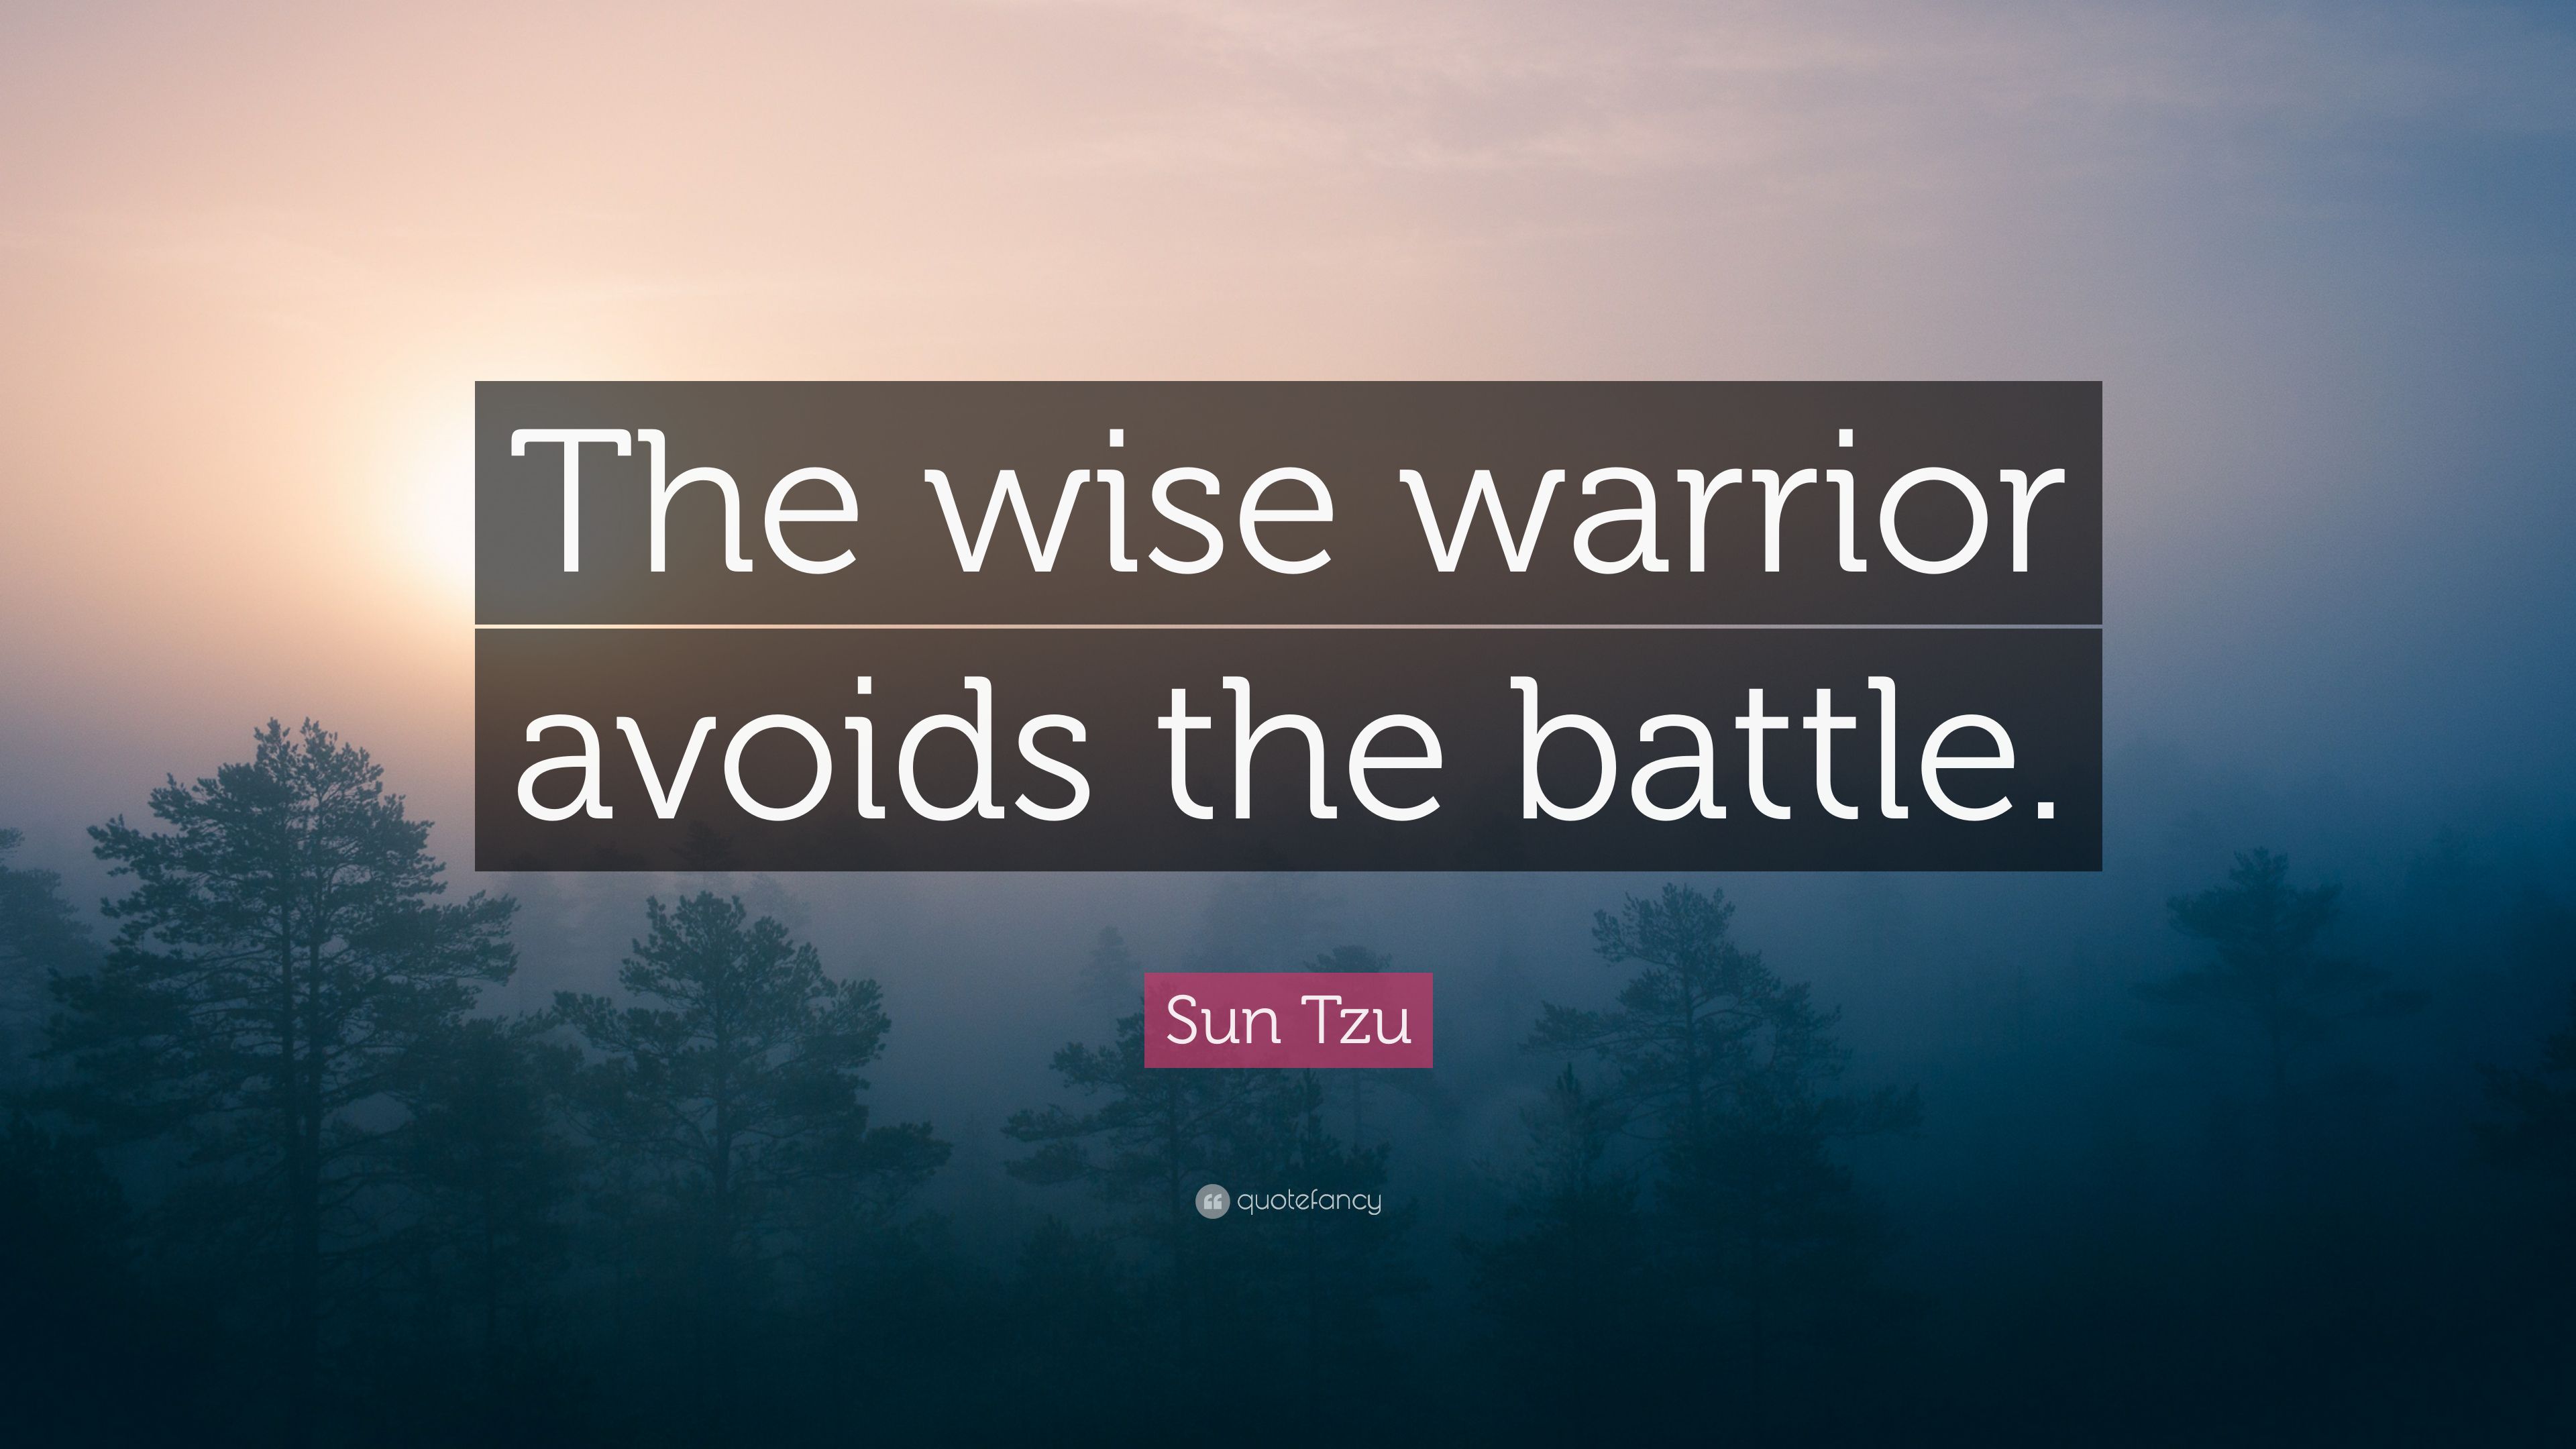 Sun Tzu Quote: “The wise warrior avoids the battle.” (9 wallpaper)